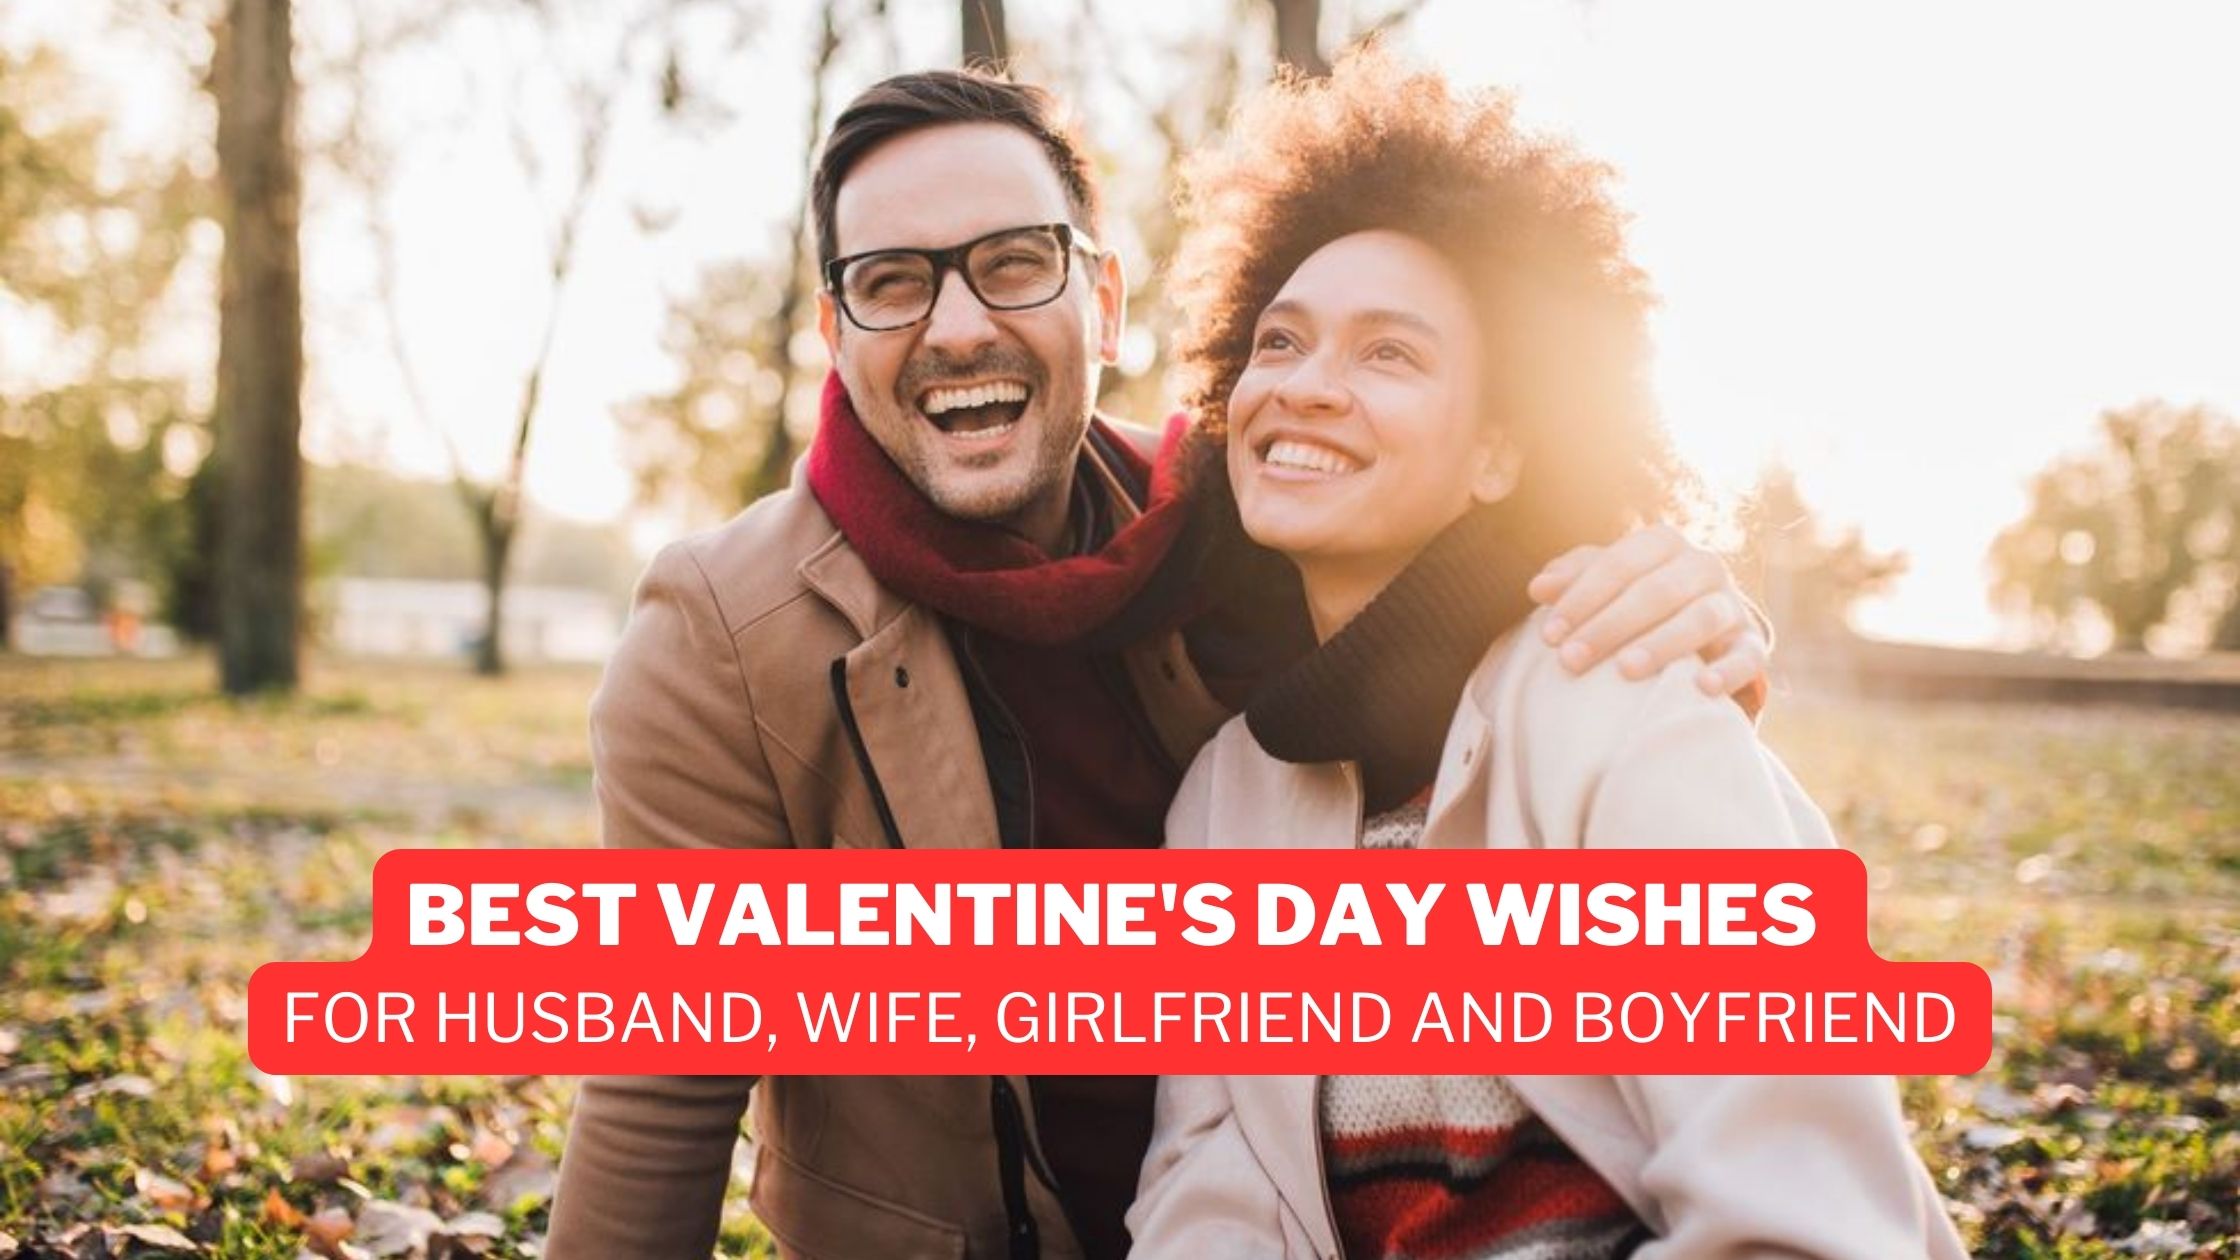 Best Valentine's Day Wishes for Husband, Wife, Girlfriend and Boyfriend